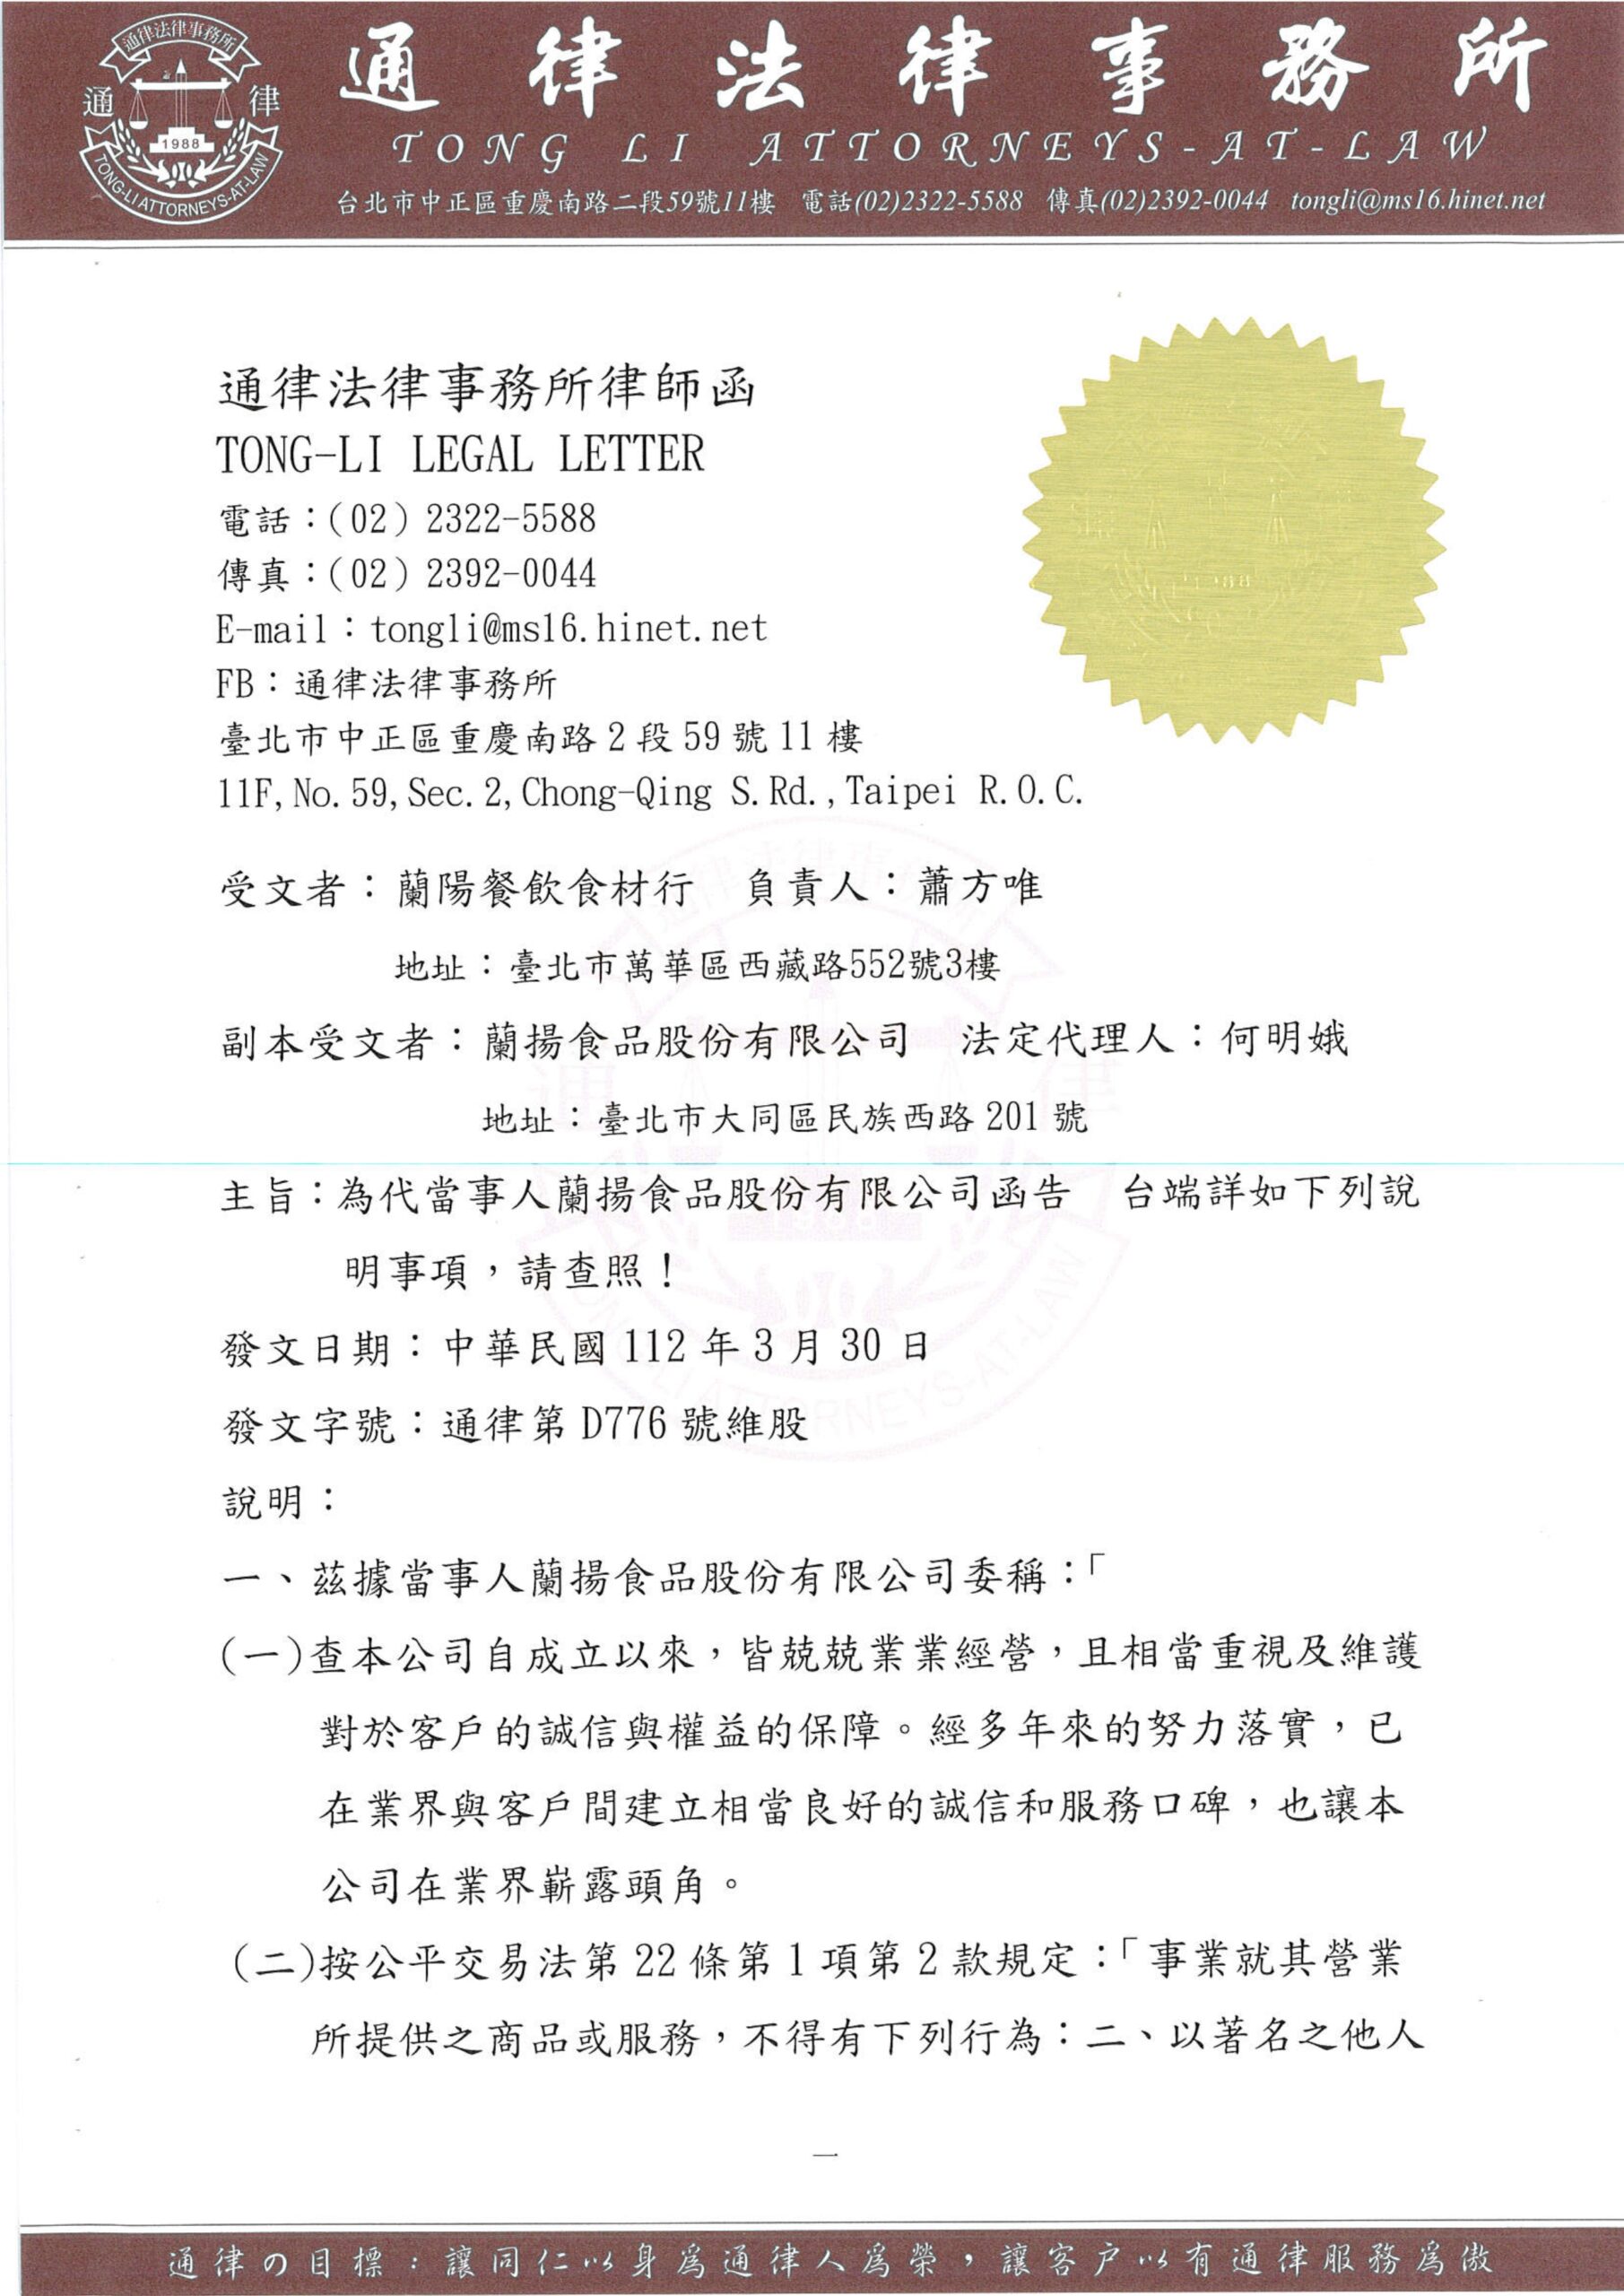 Lanyang Catering and Ingredients Store_Anwaltsbrief 230331 erhalten_Seite-0001